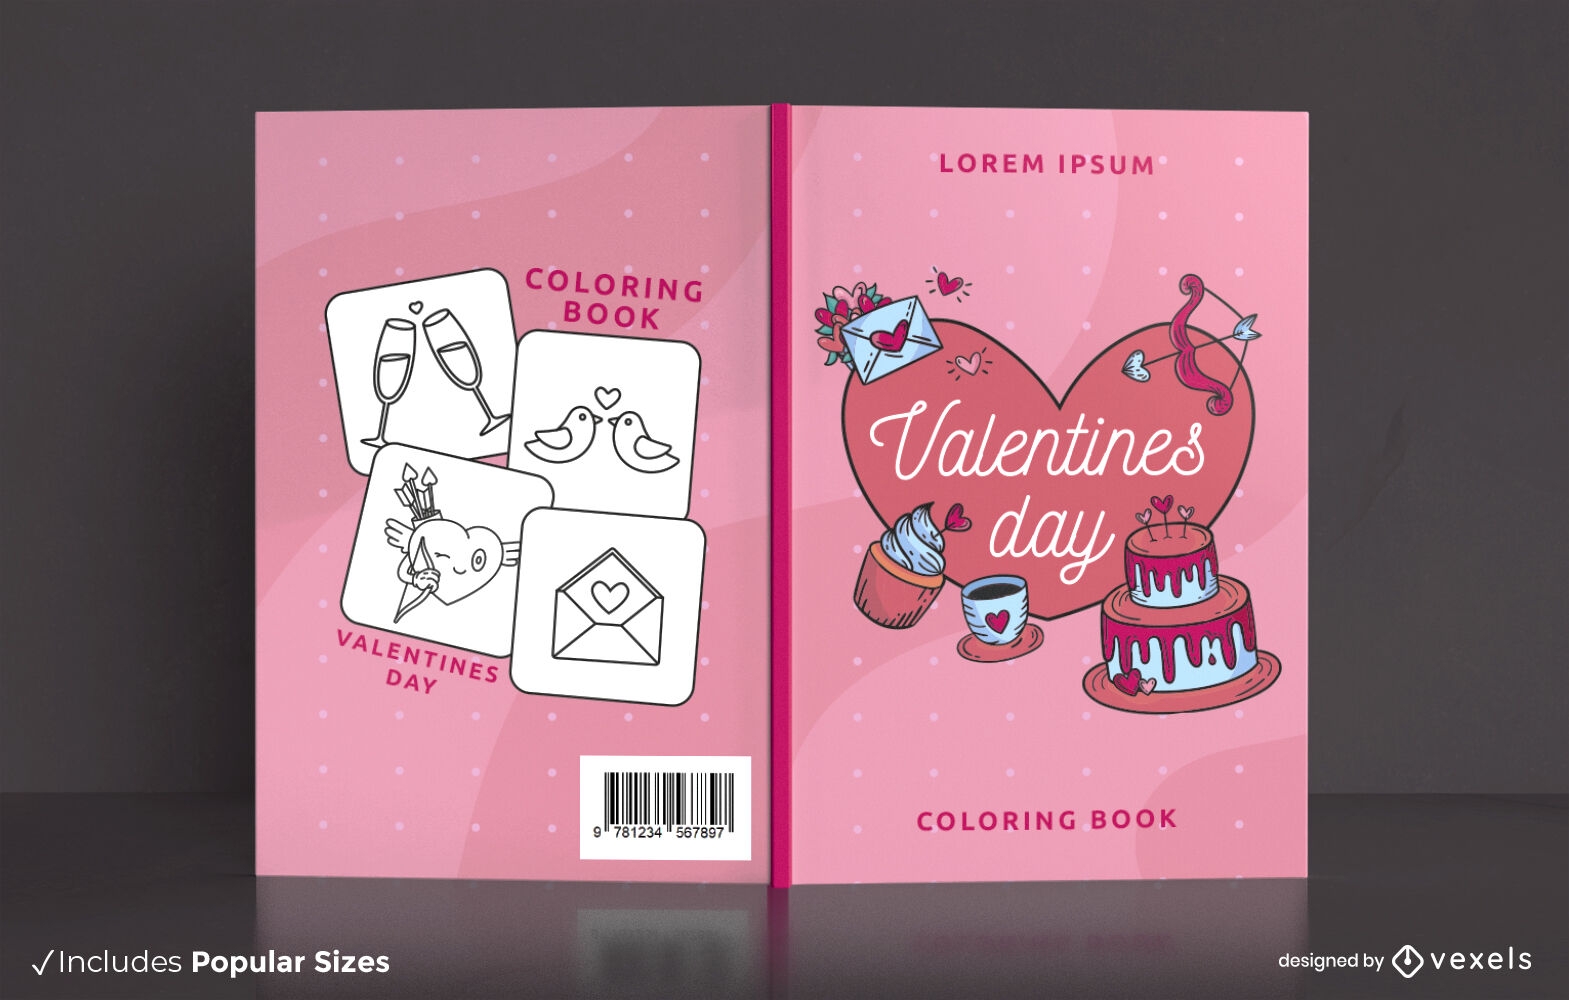 Valentines coloring book cover design